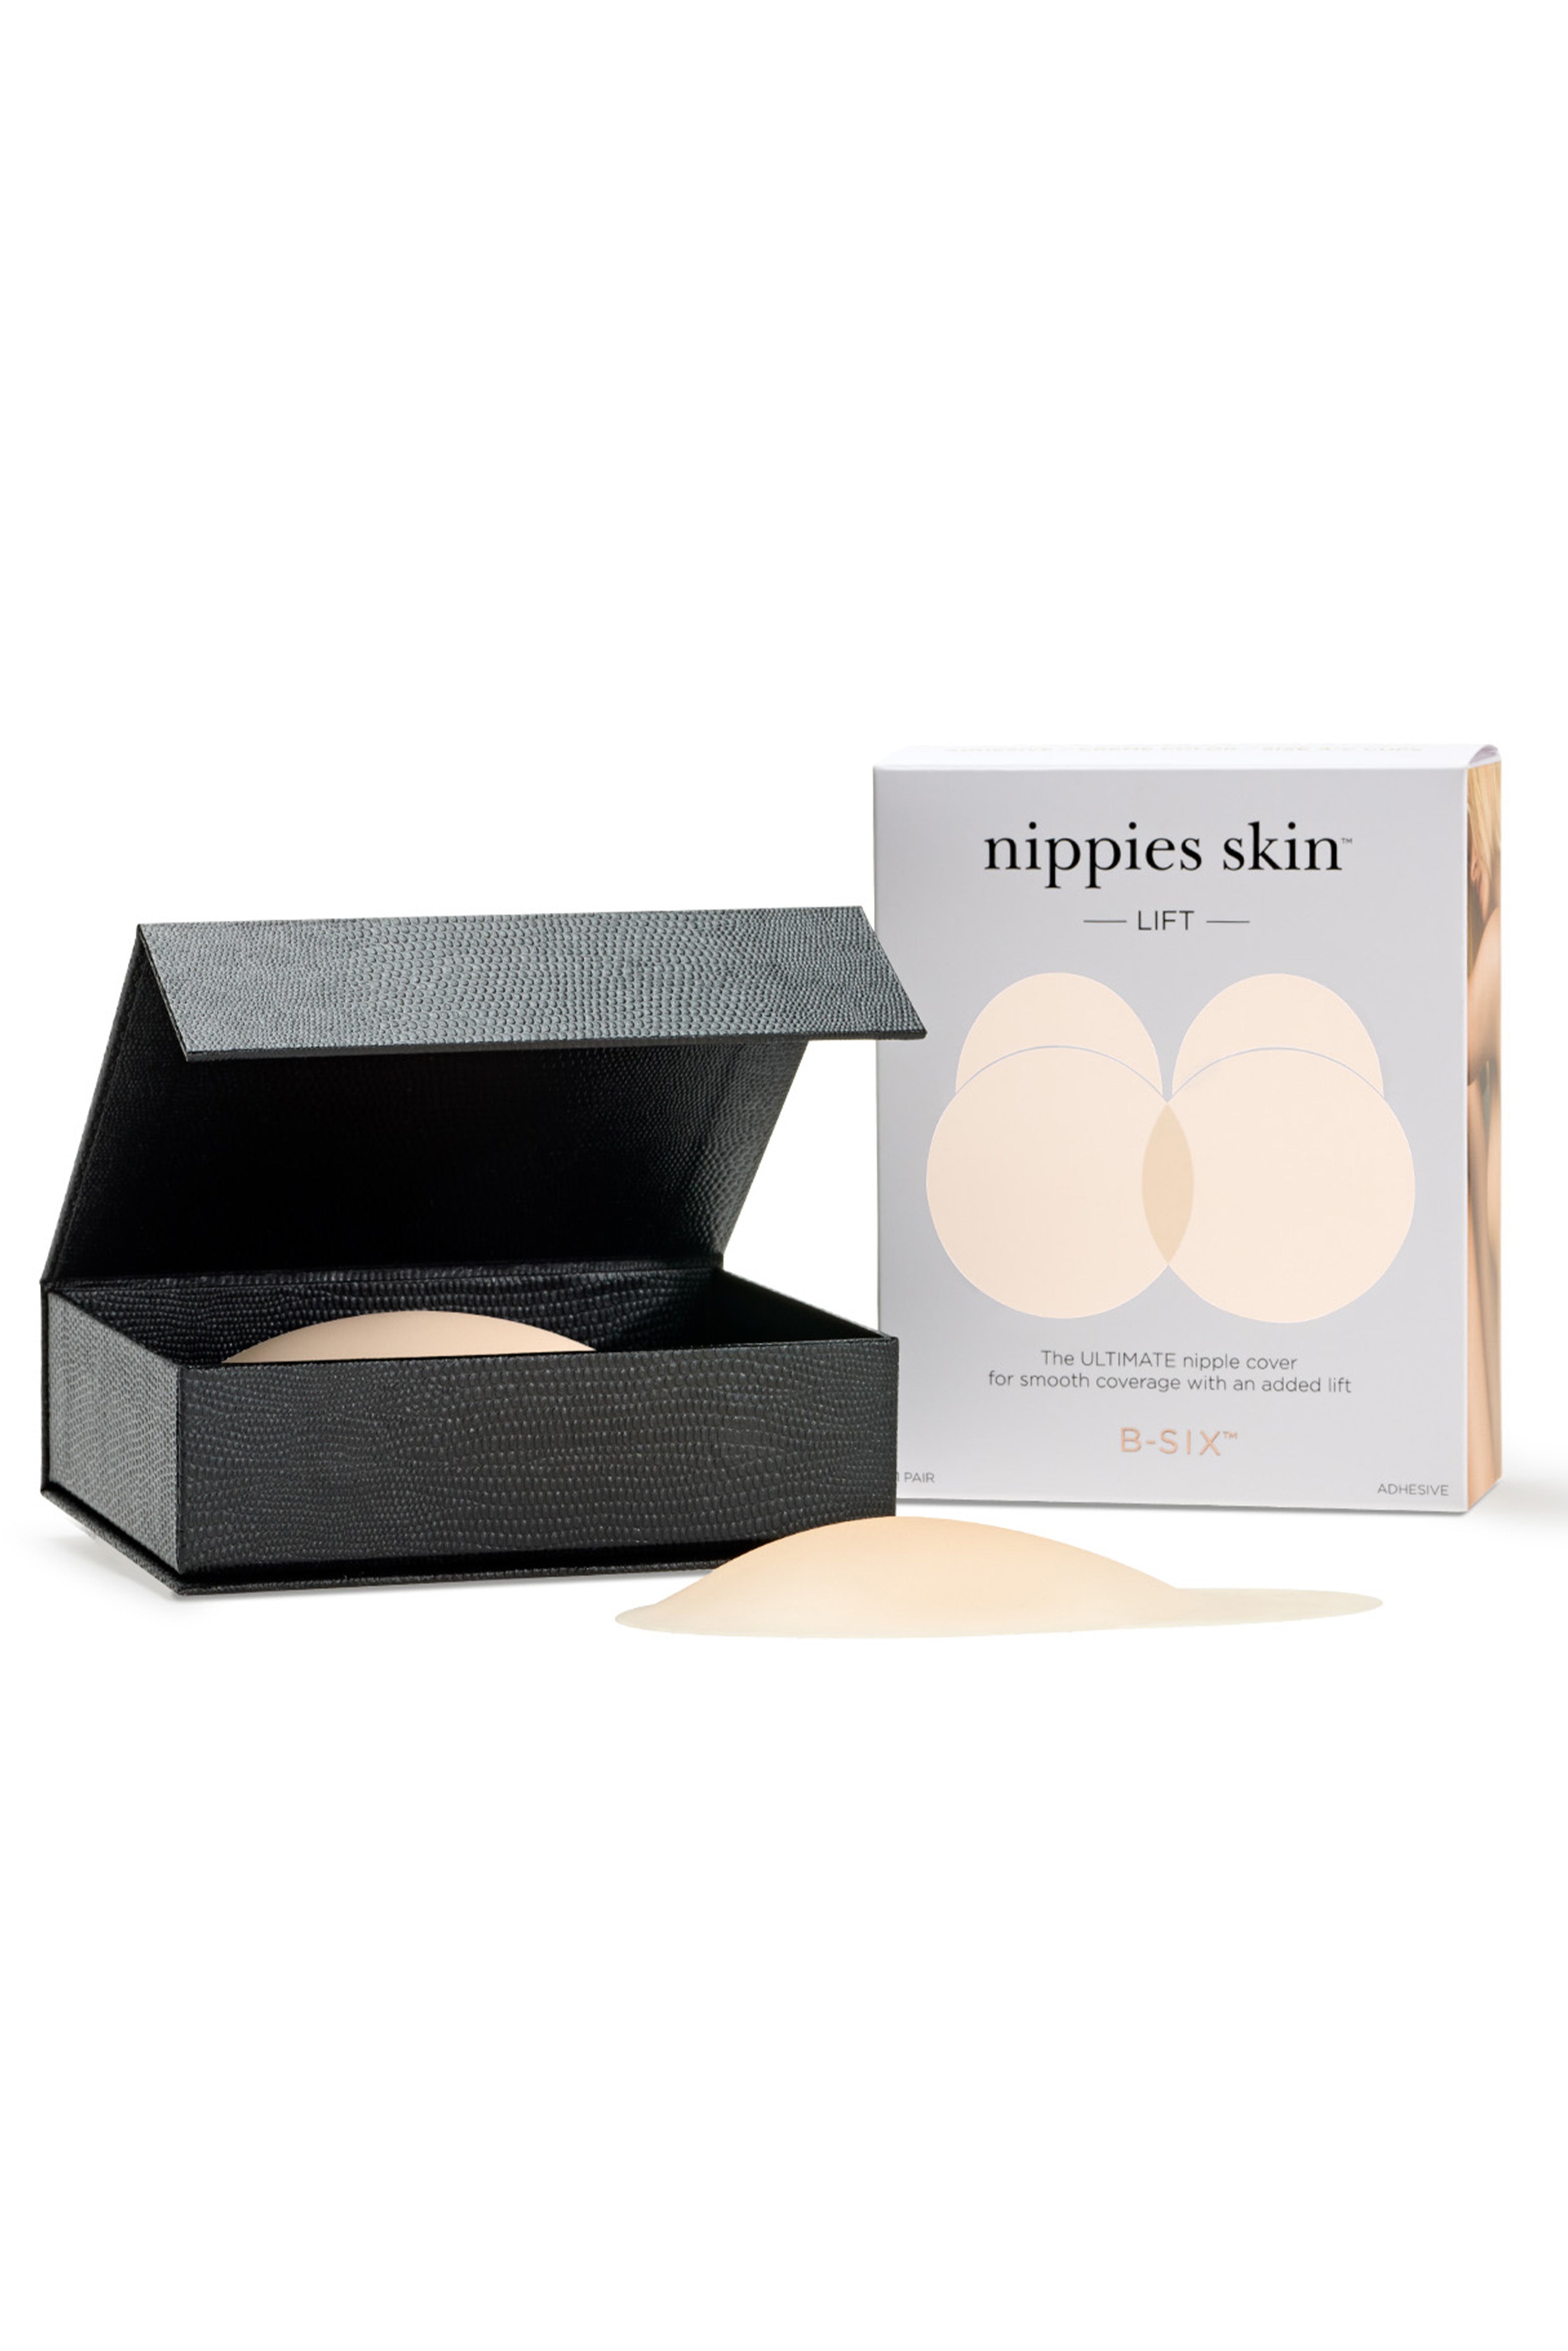 Nipple covers 24 Pack – Bringitup